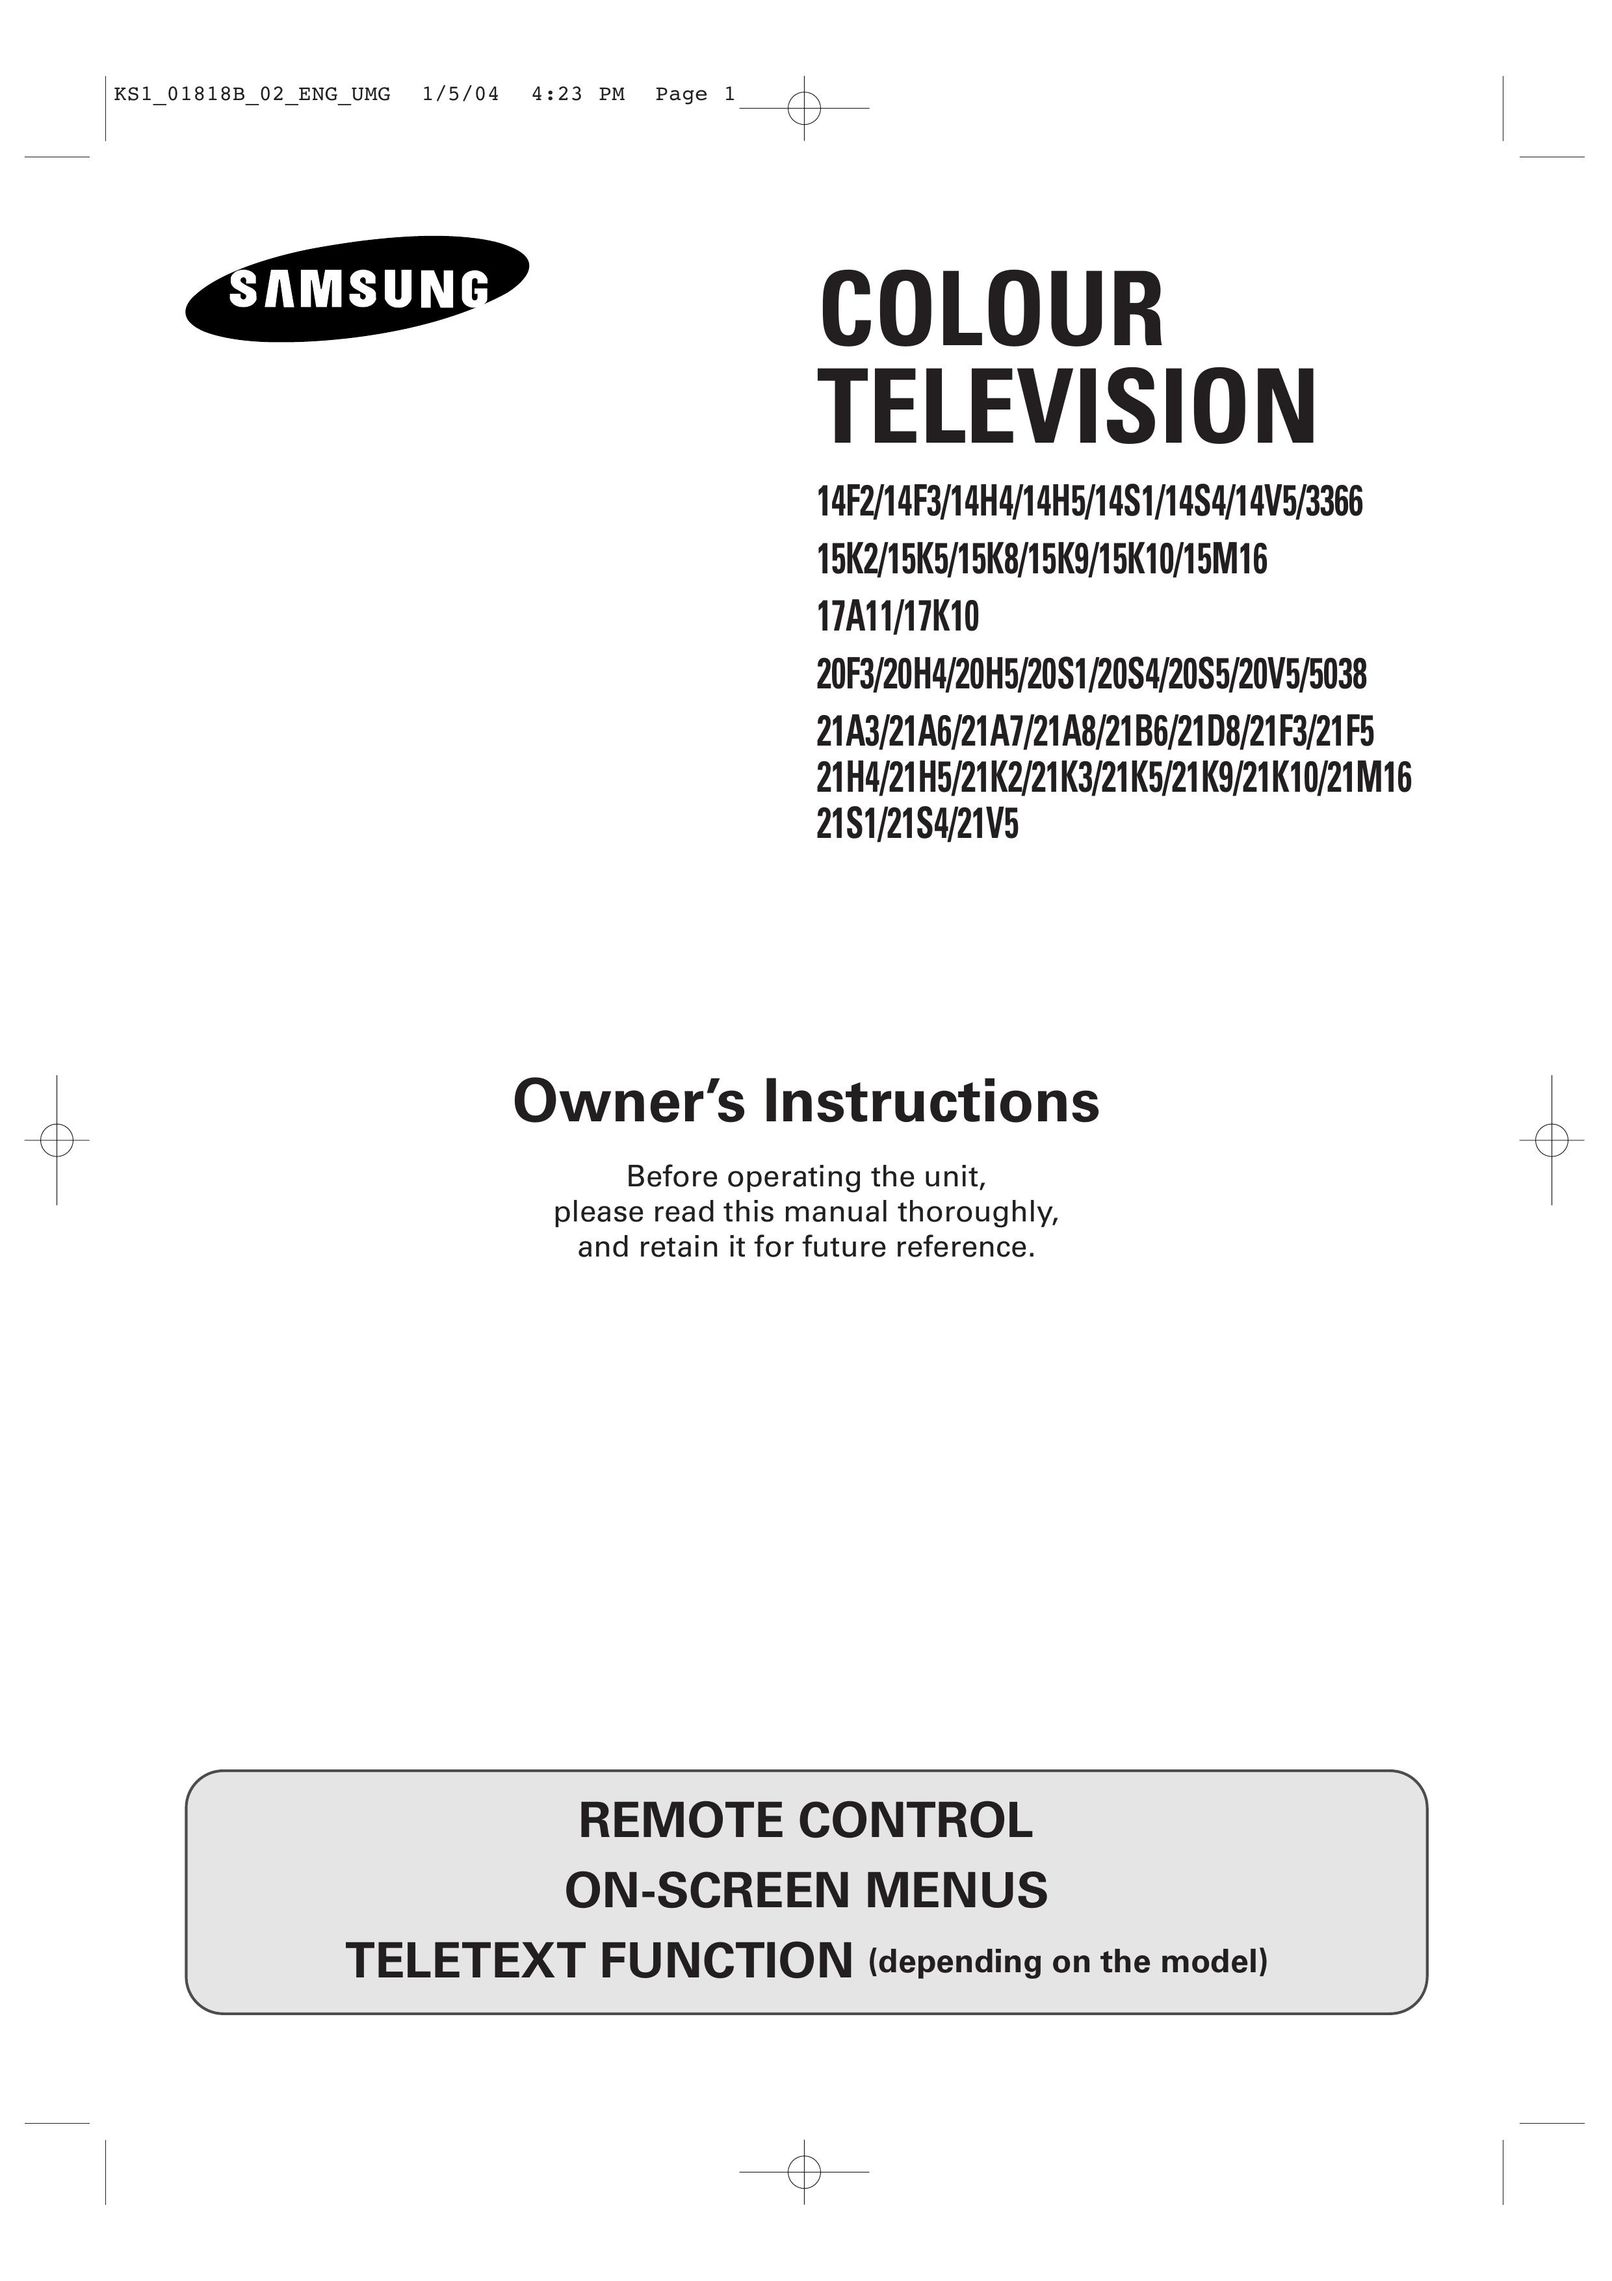 Samsung 21S CRT Television User Manual